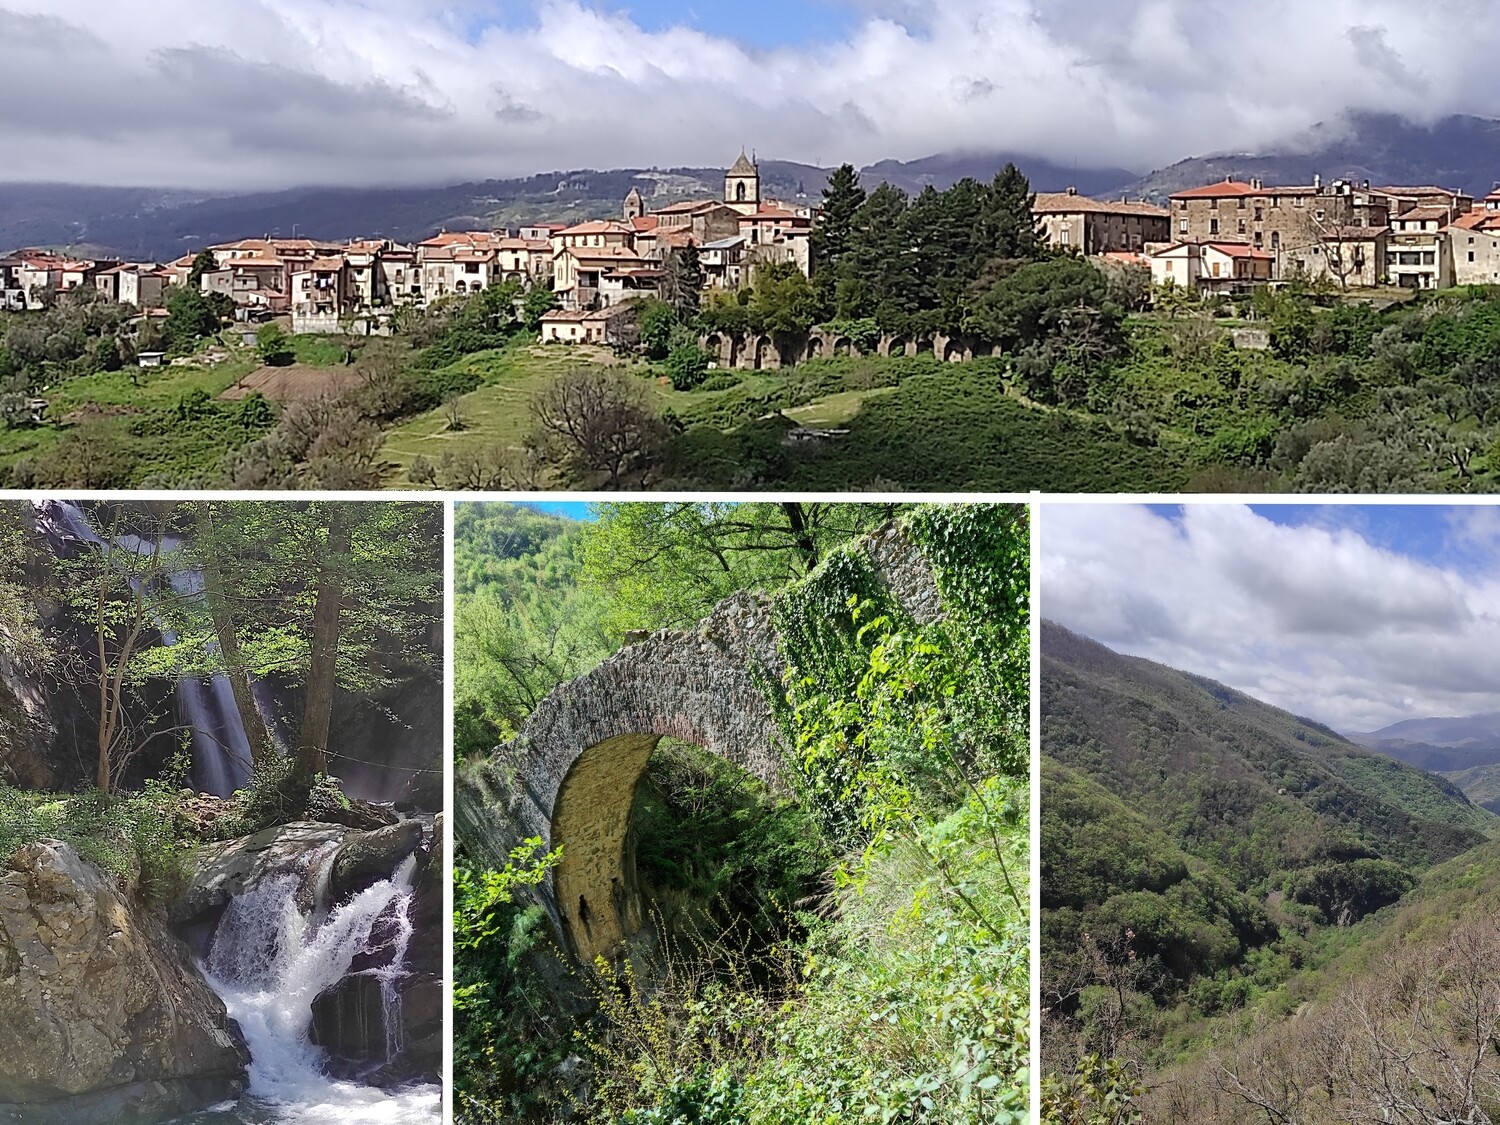 Escursione Urbana e Extraurbana - Borgo Rogliano e Cascate Cannavina